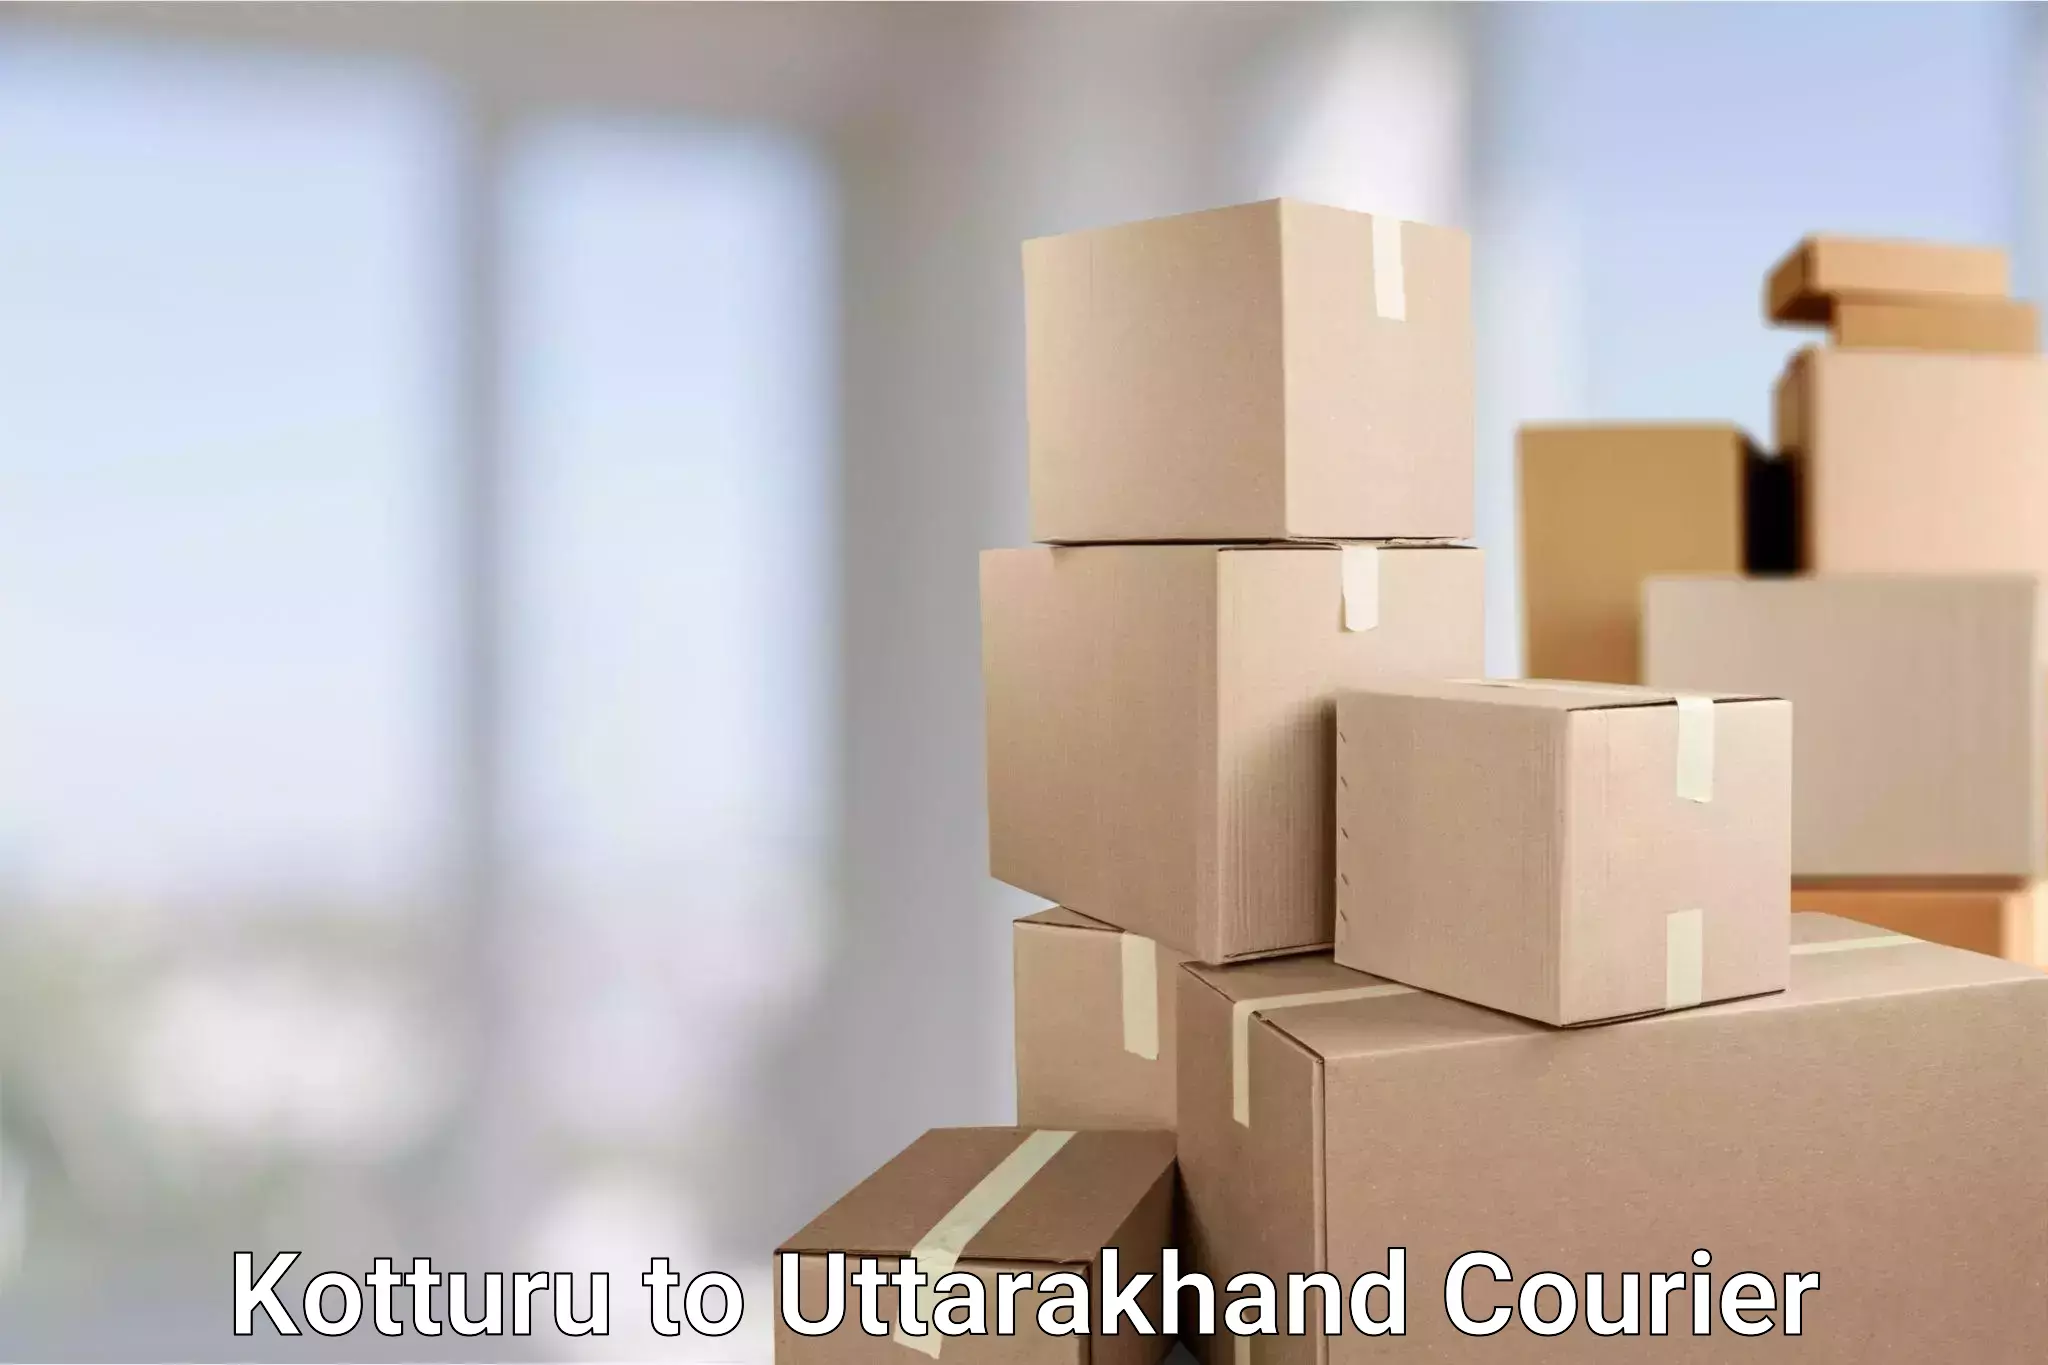 High-efficiency logistics Kotturu to Rudrapur